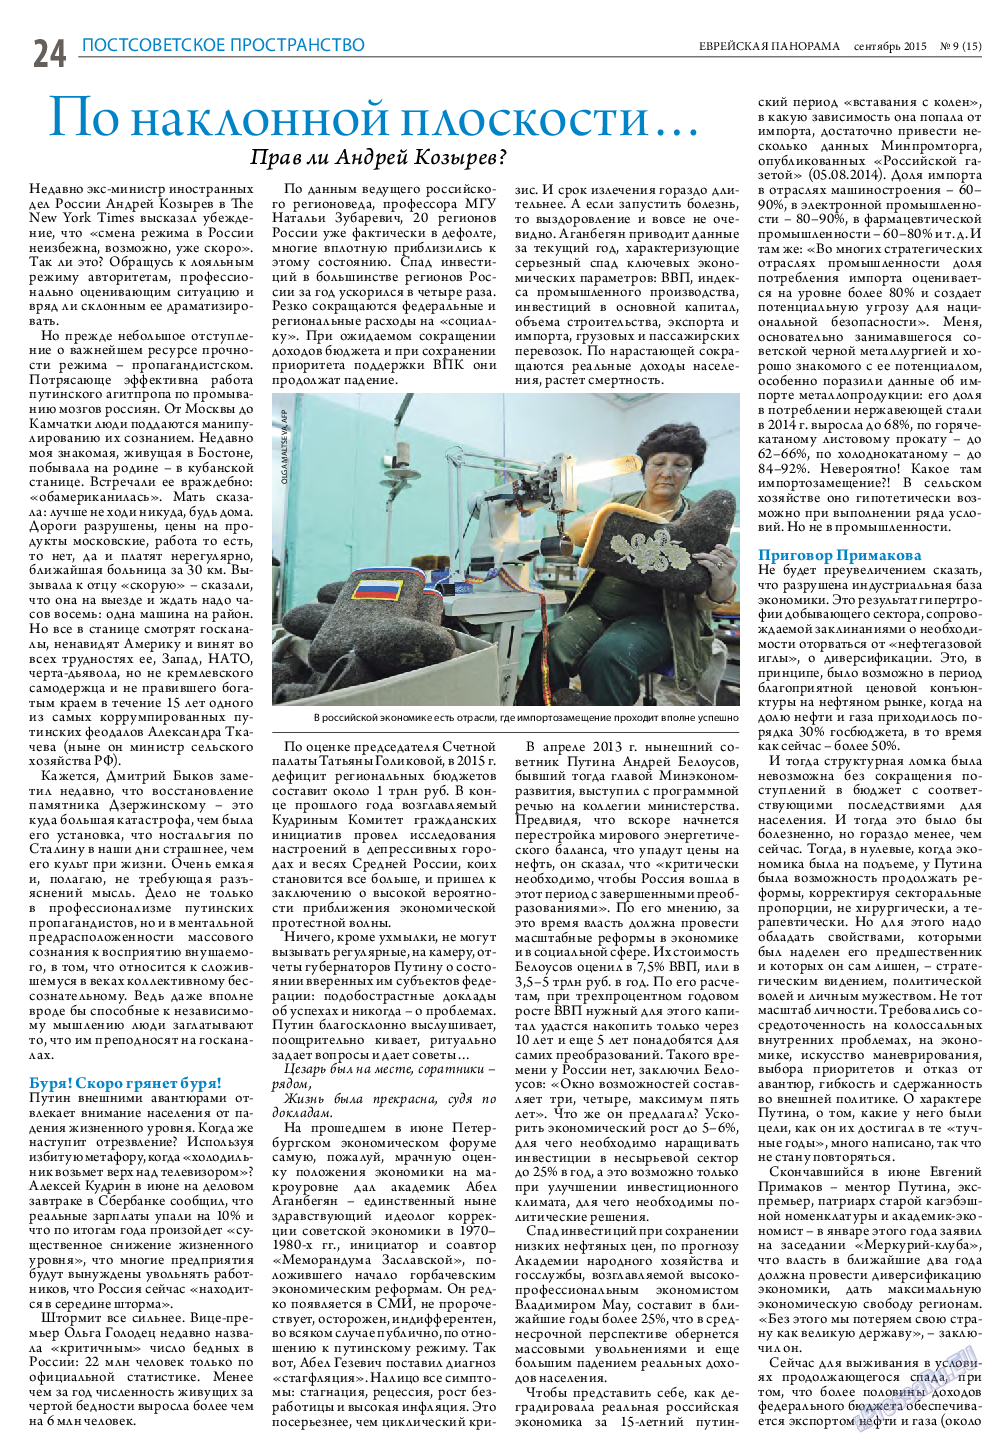 Еврейская панорама, газета. 2015 №9 стр.24